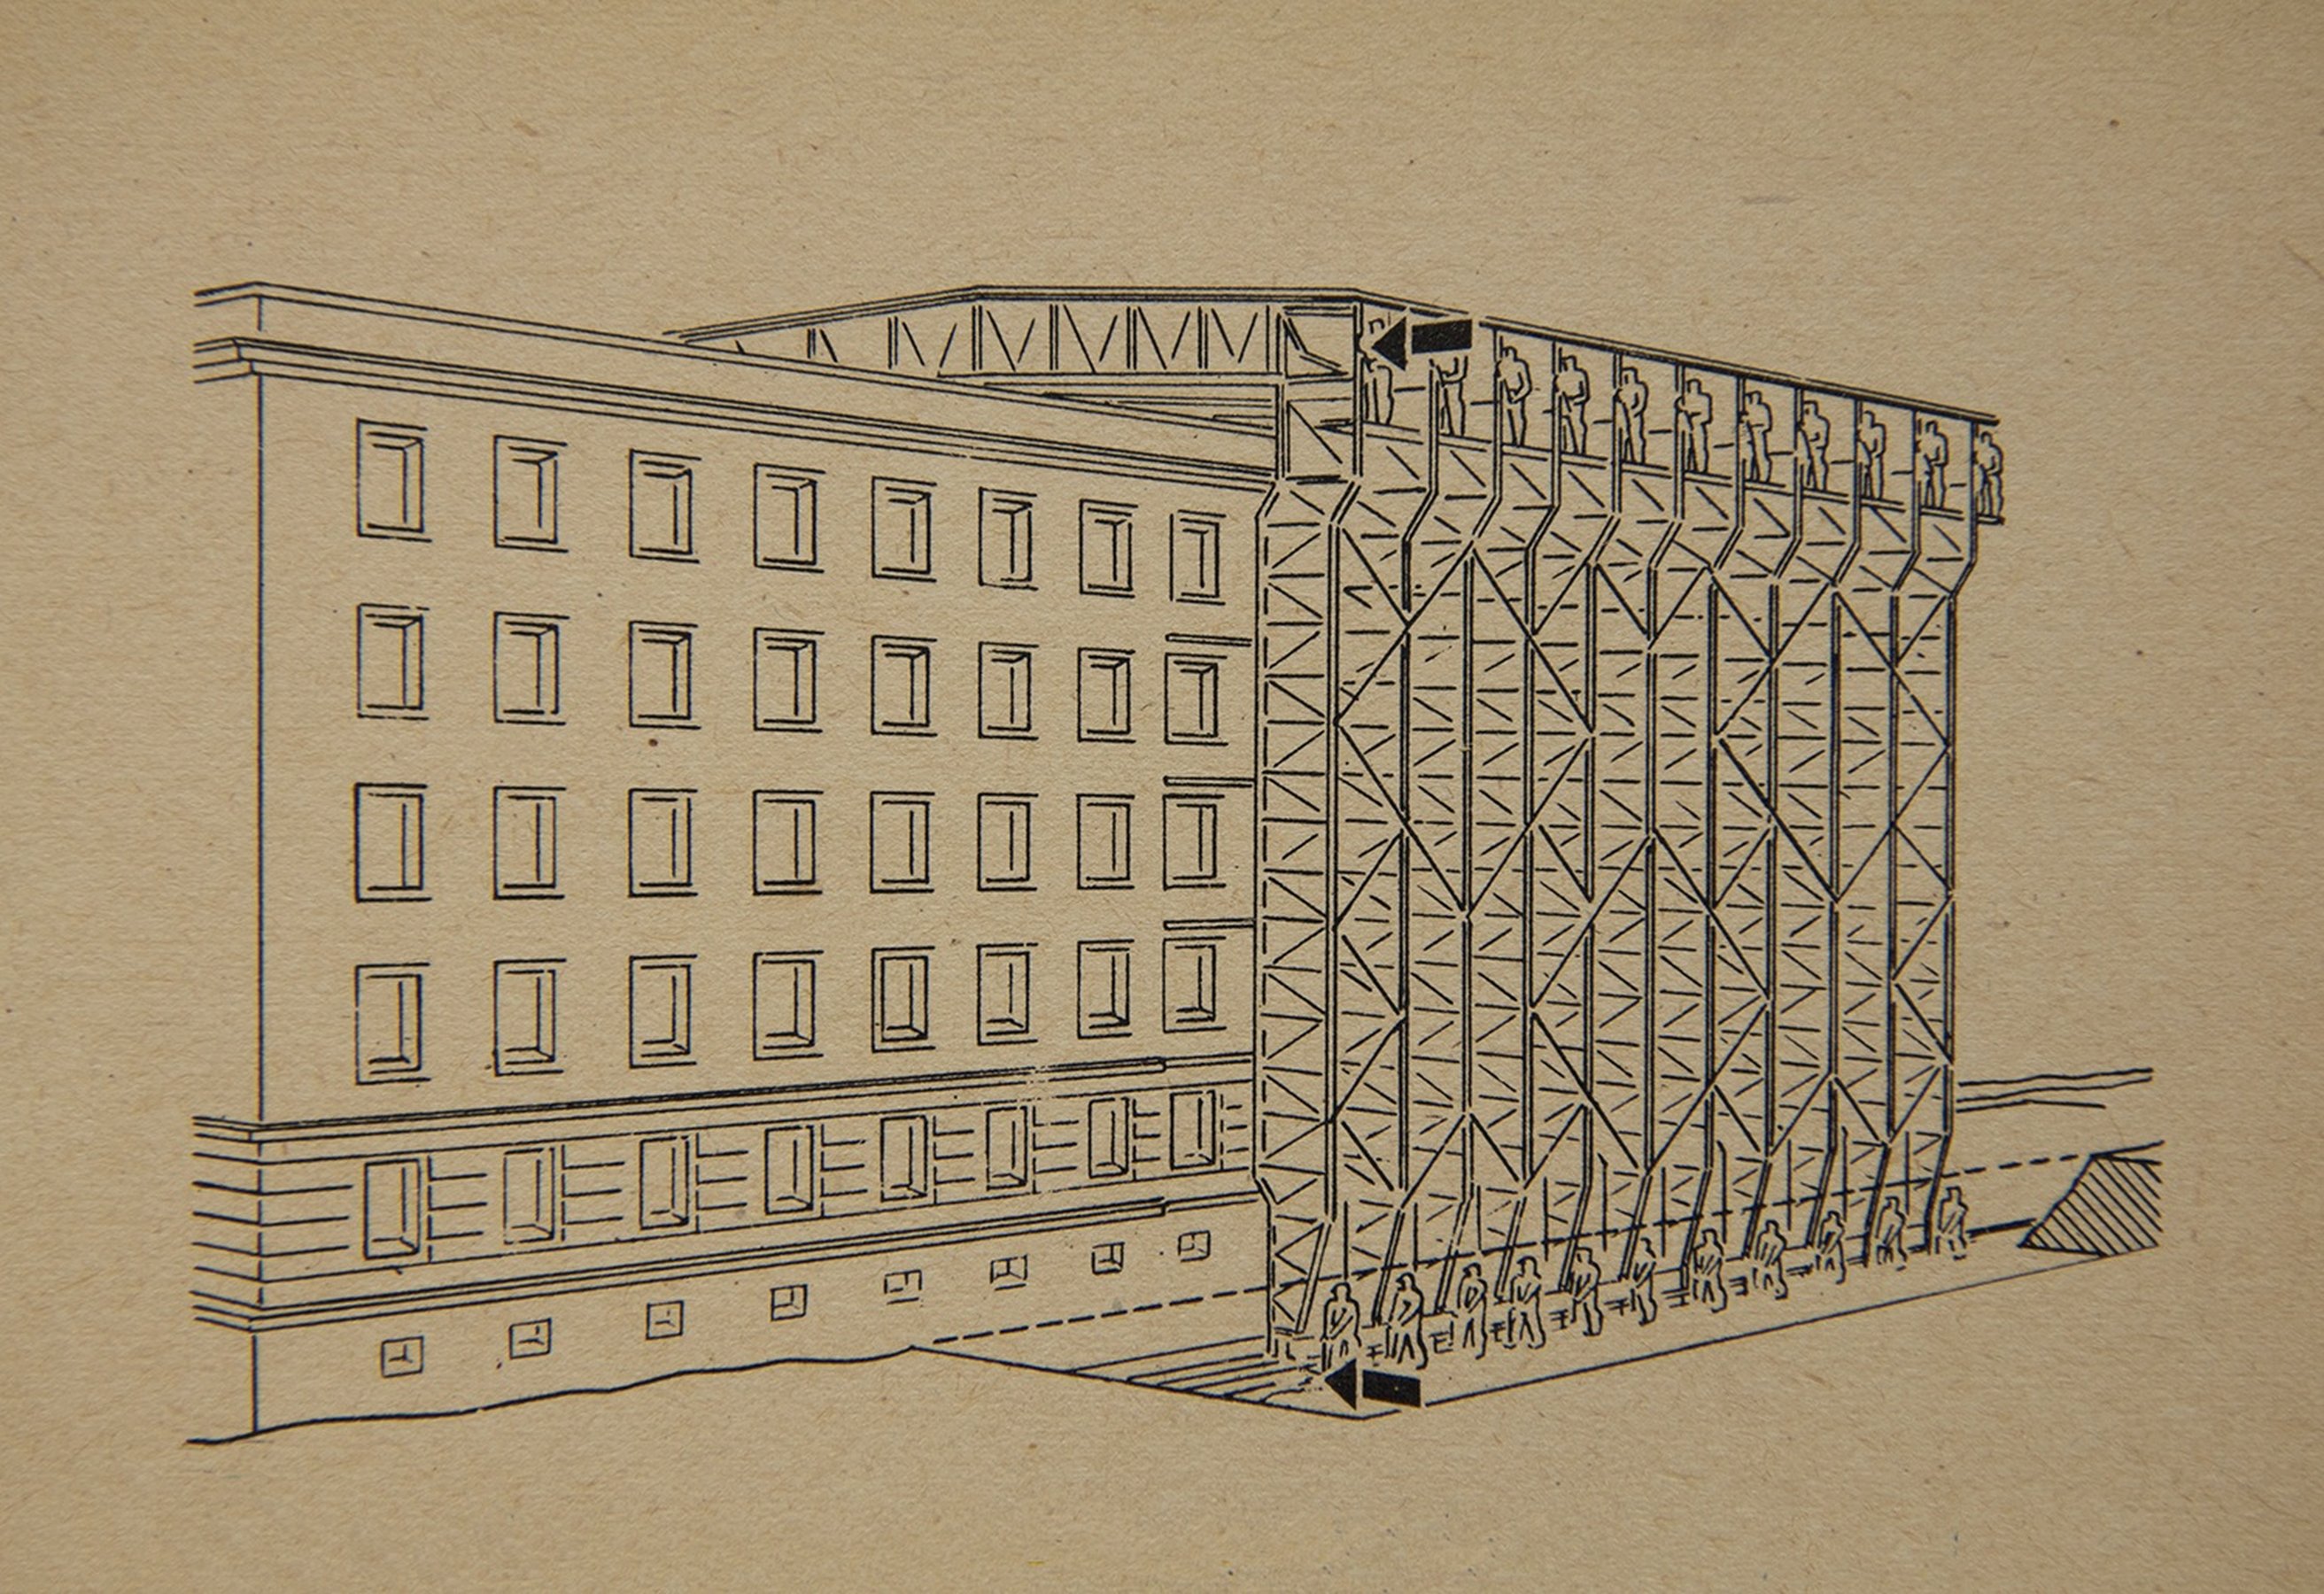 Hausbaumaschine(blueprint from the 1943)